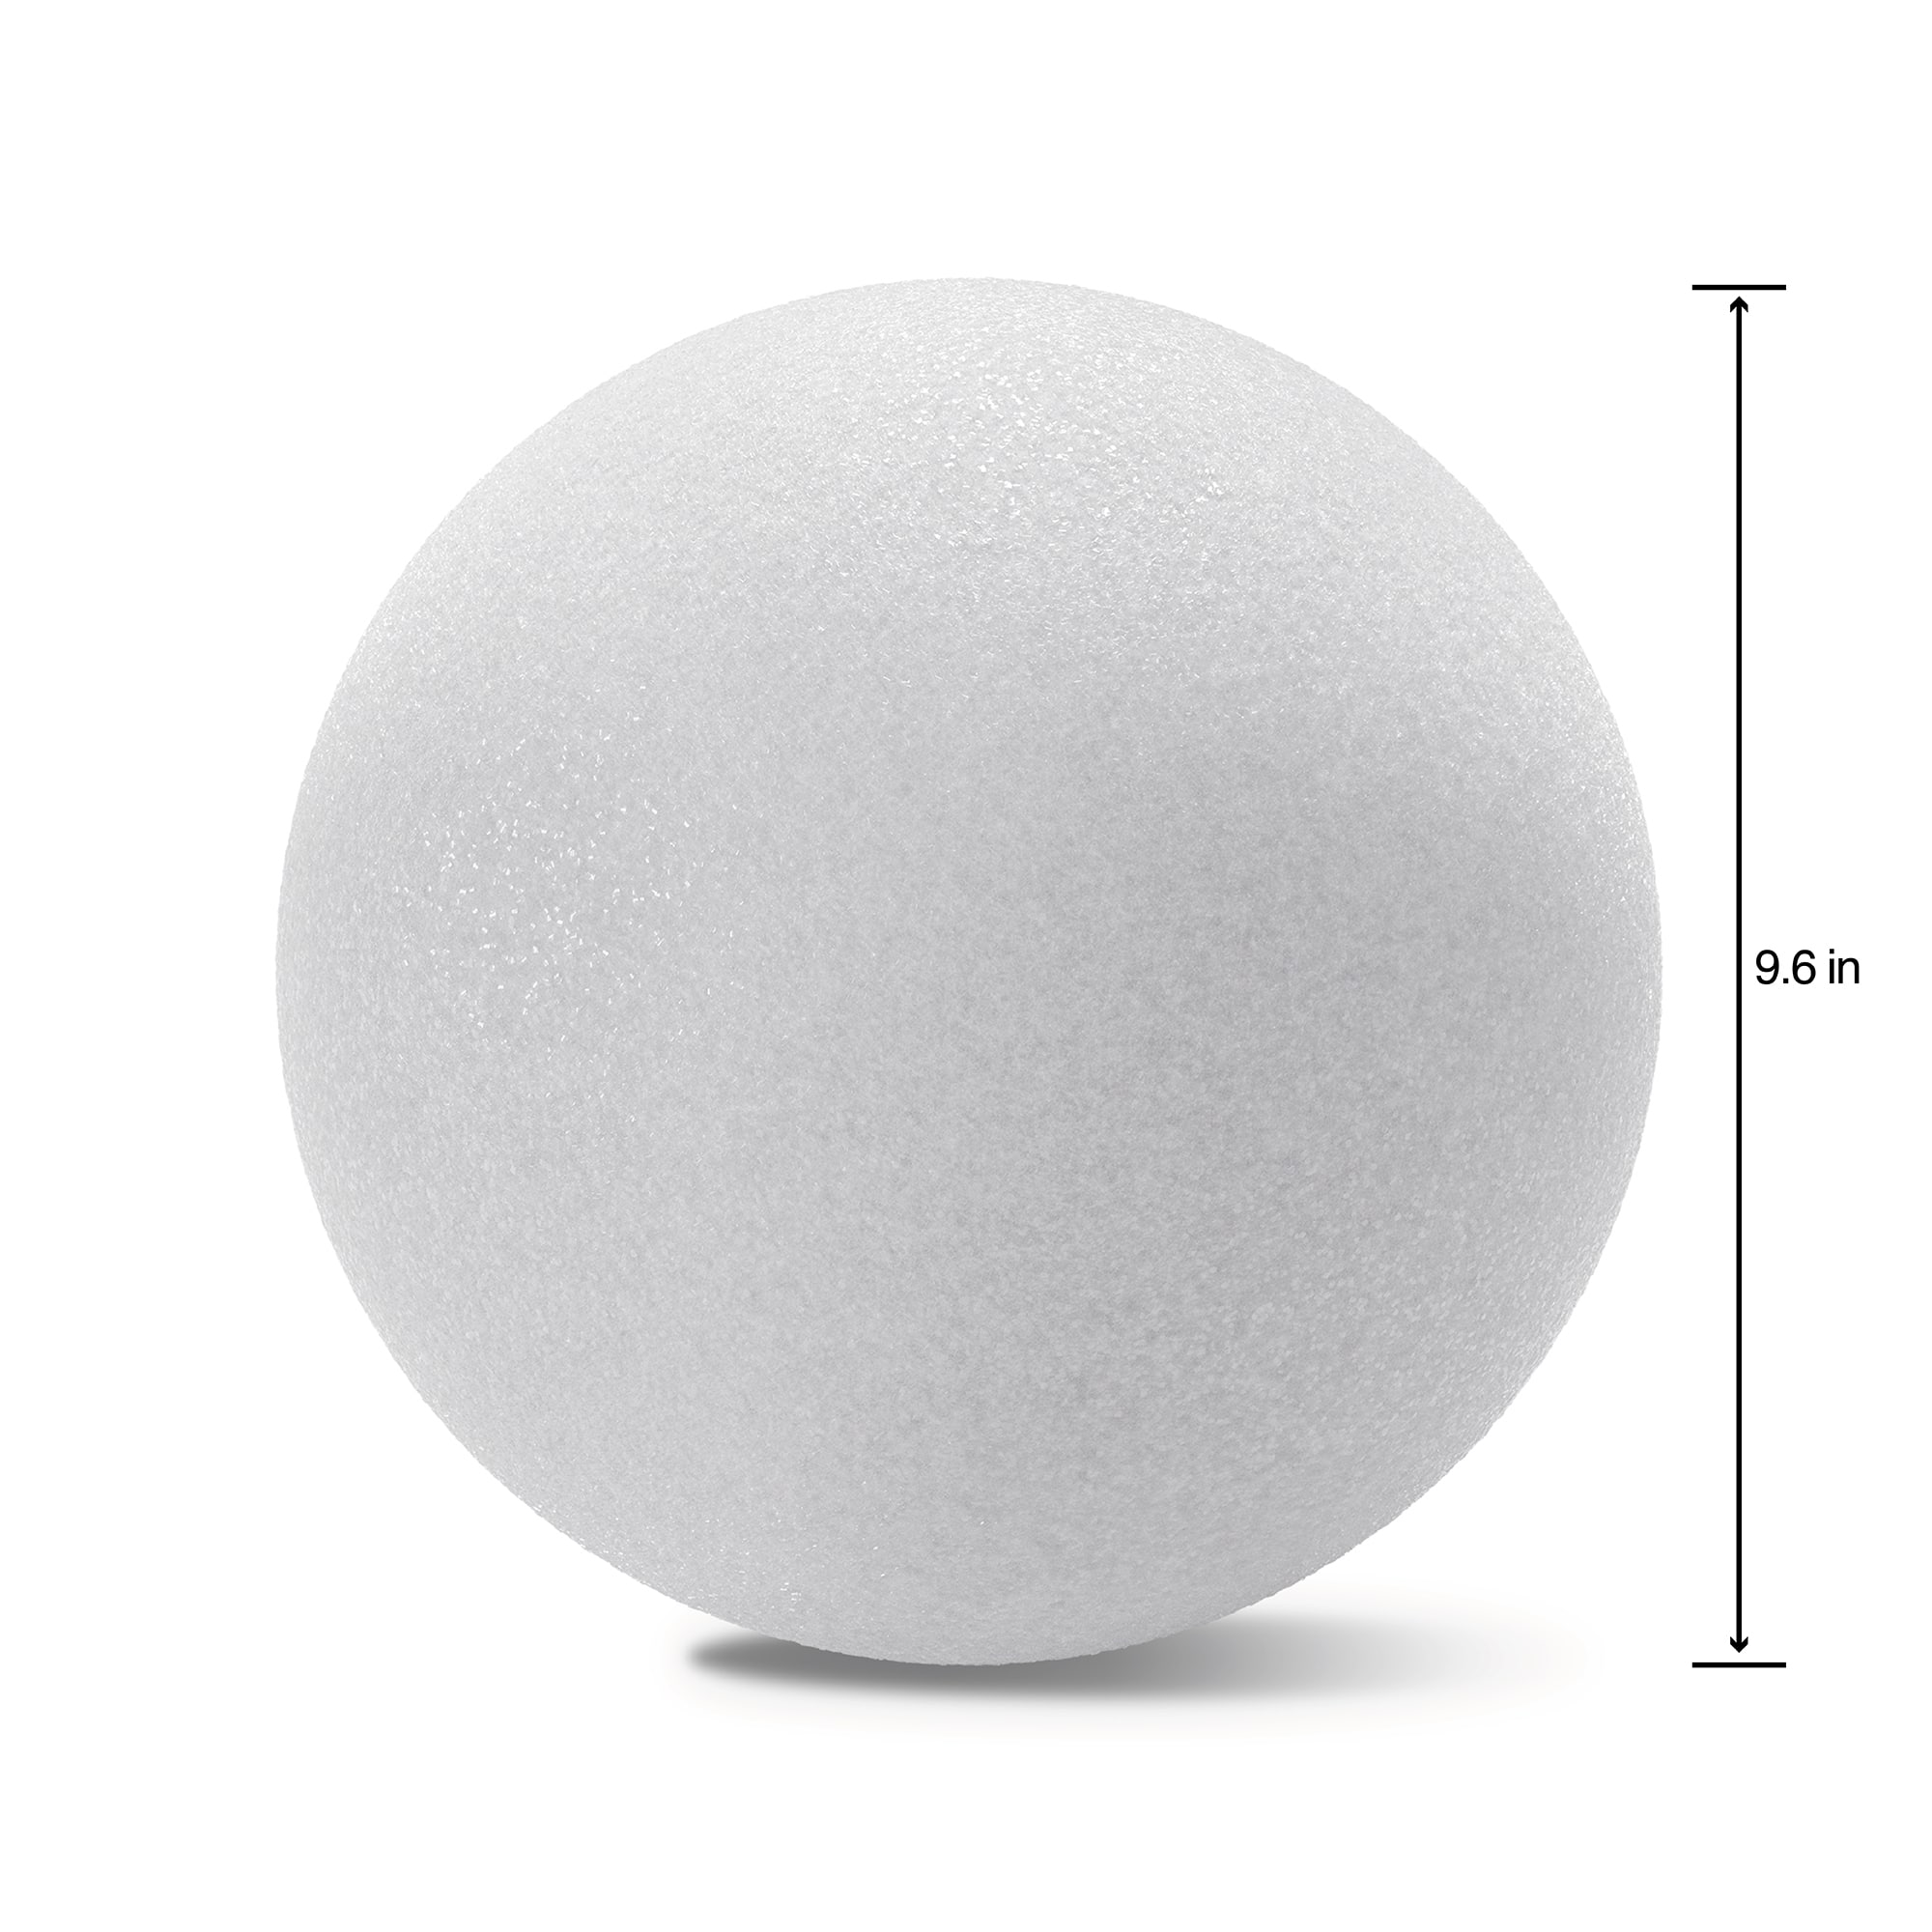 4 X Customizable PARTY BALL - 8 White Styrofoam